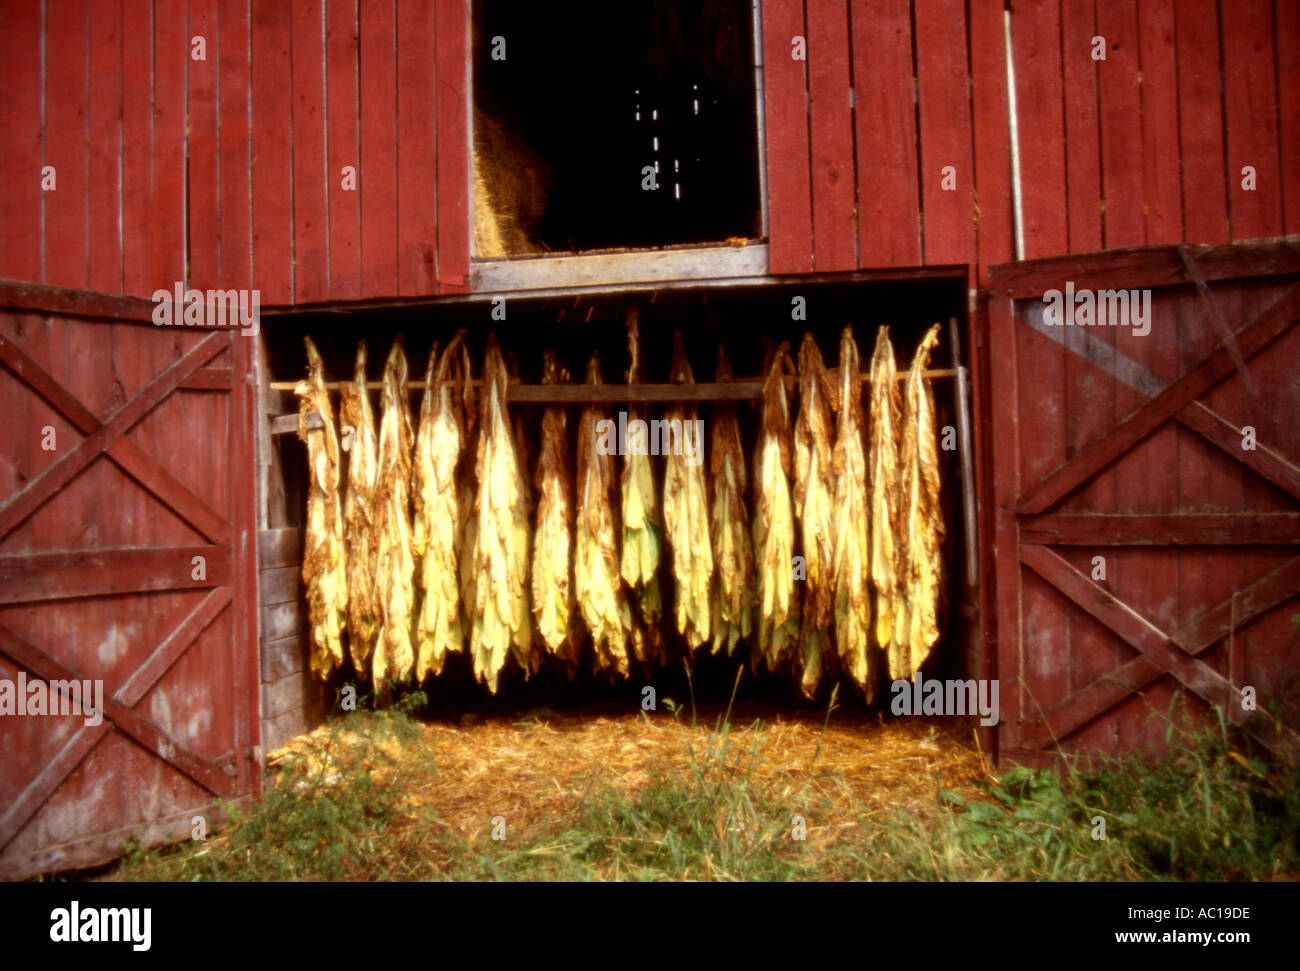 Tobacco Drying In Barn Stock Photo